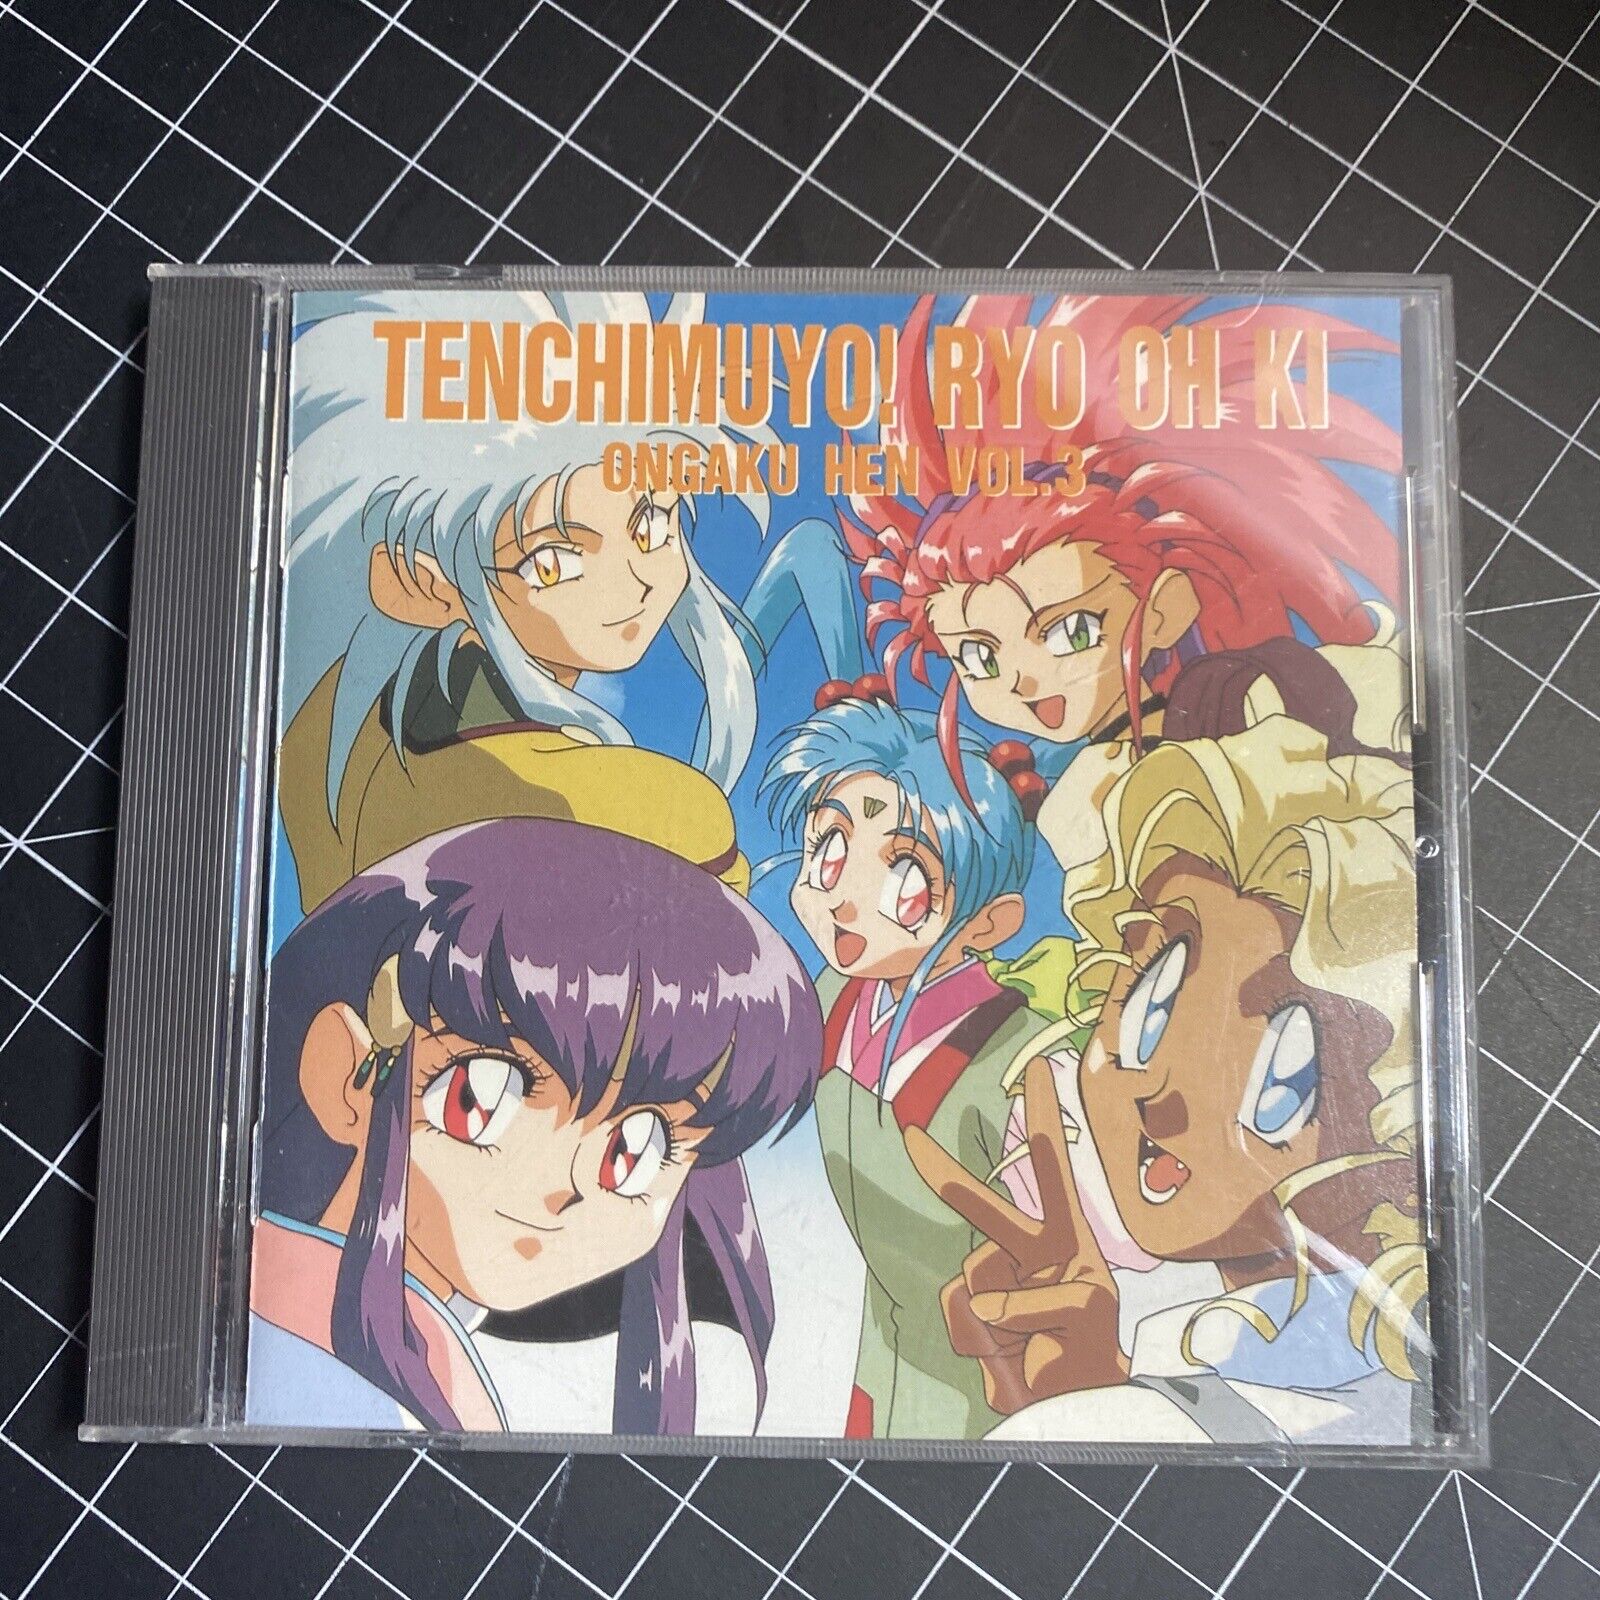 Tenchi Muyo Ryo Oh Ki Ongaku Hen Vol 3 Soundtrack Japanese CD US SELLER